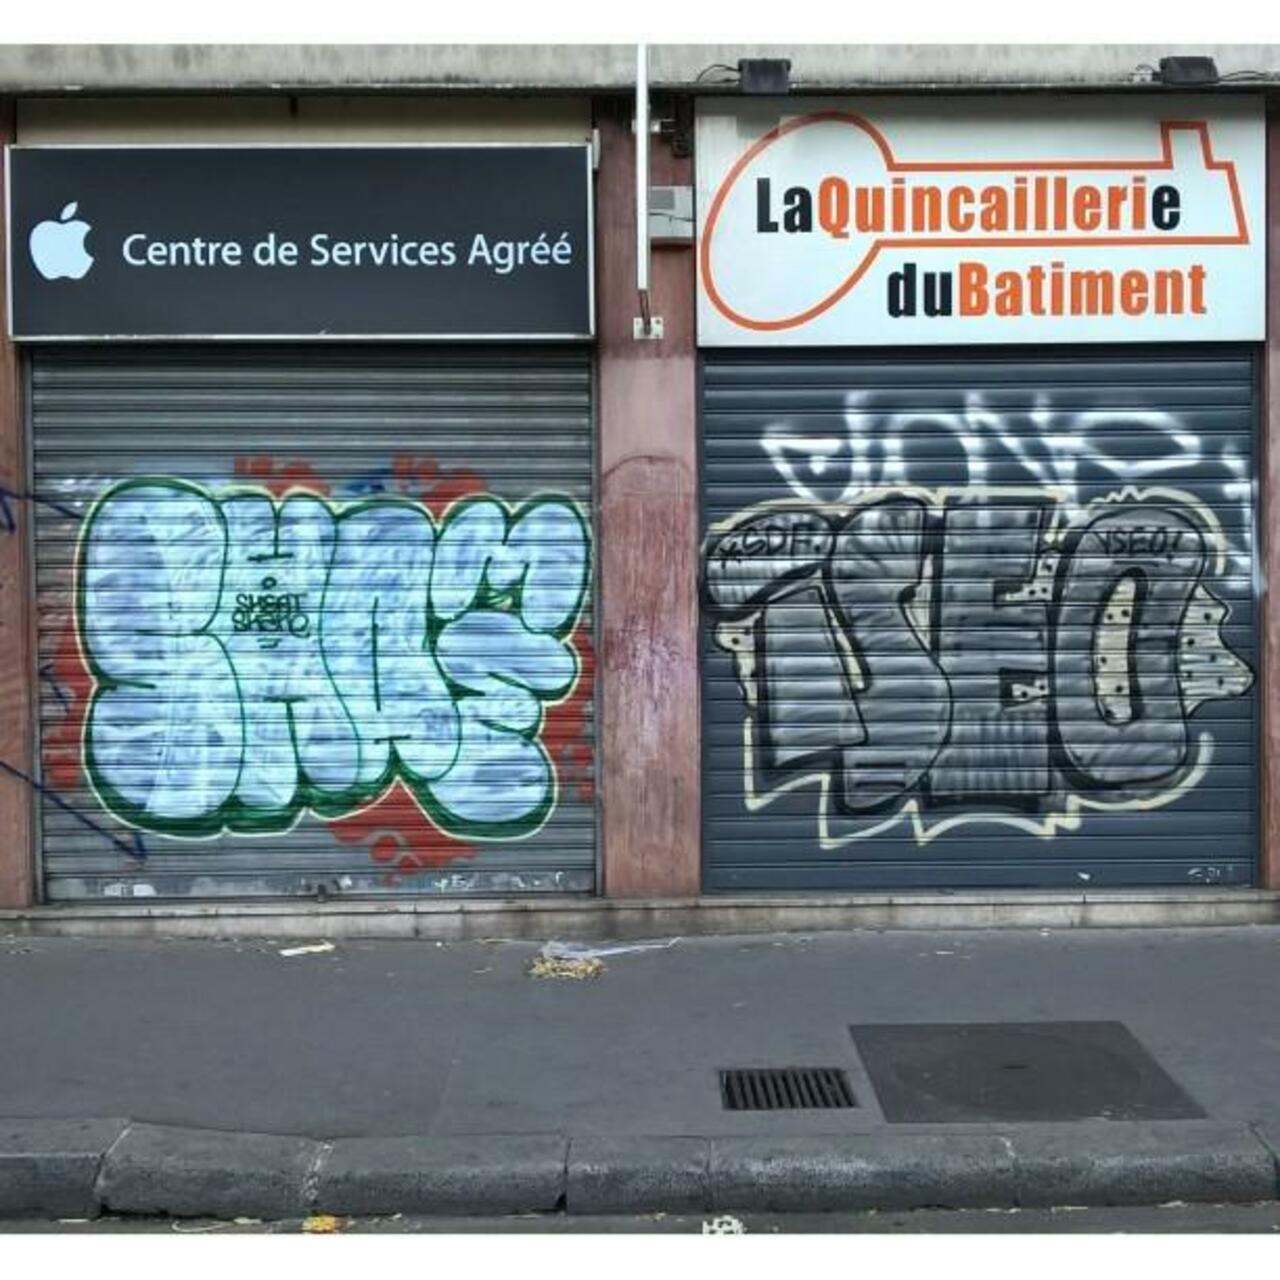 SHAME ISEO
#streetart #graffiti #graff #art #fatcap #bombing #sprayart #spraycanart #wallart #handstyle #lettering … http://t.co/8ubY8gqw7L